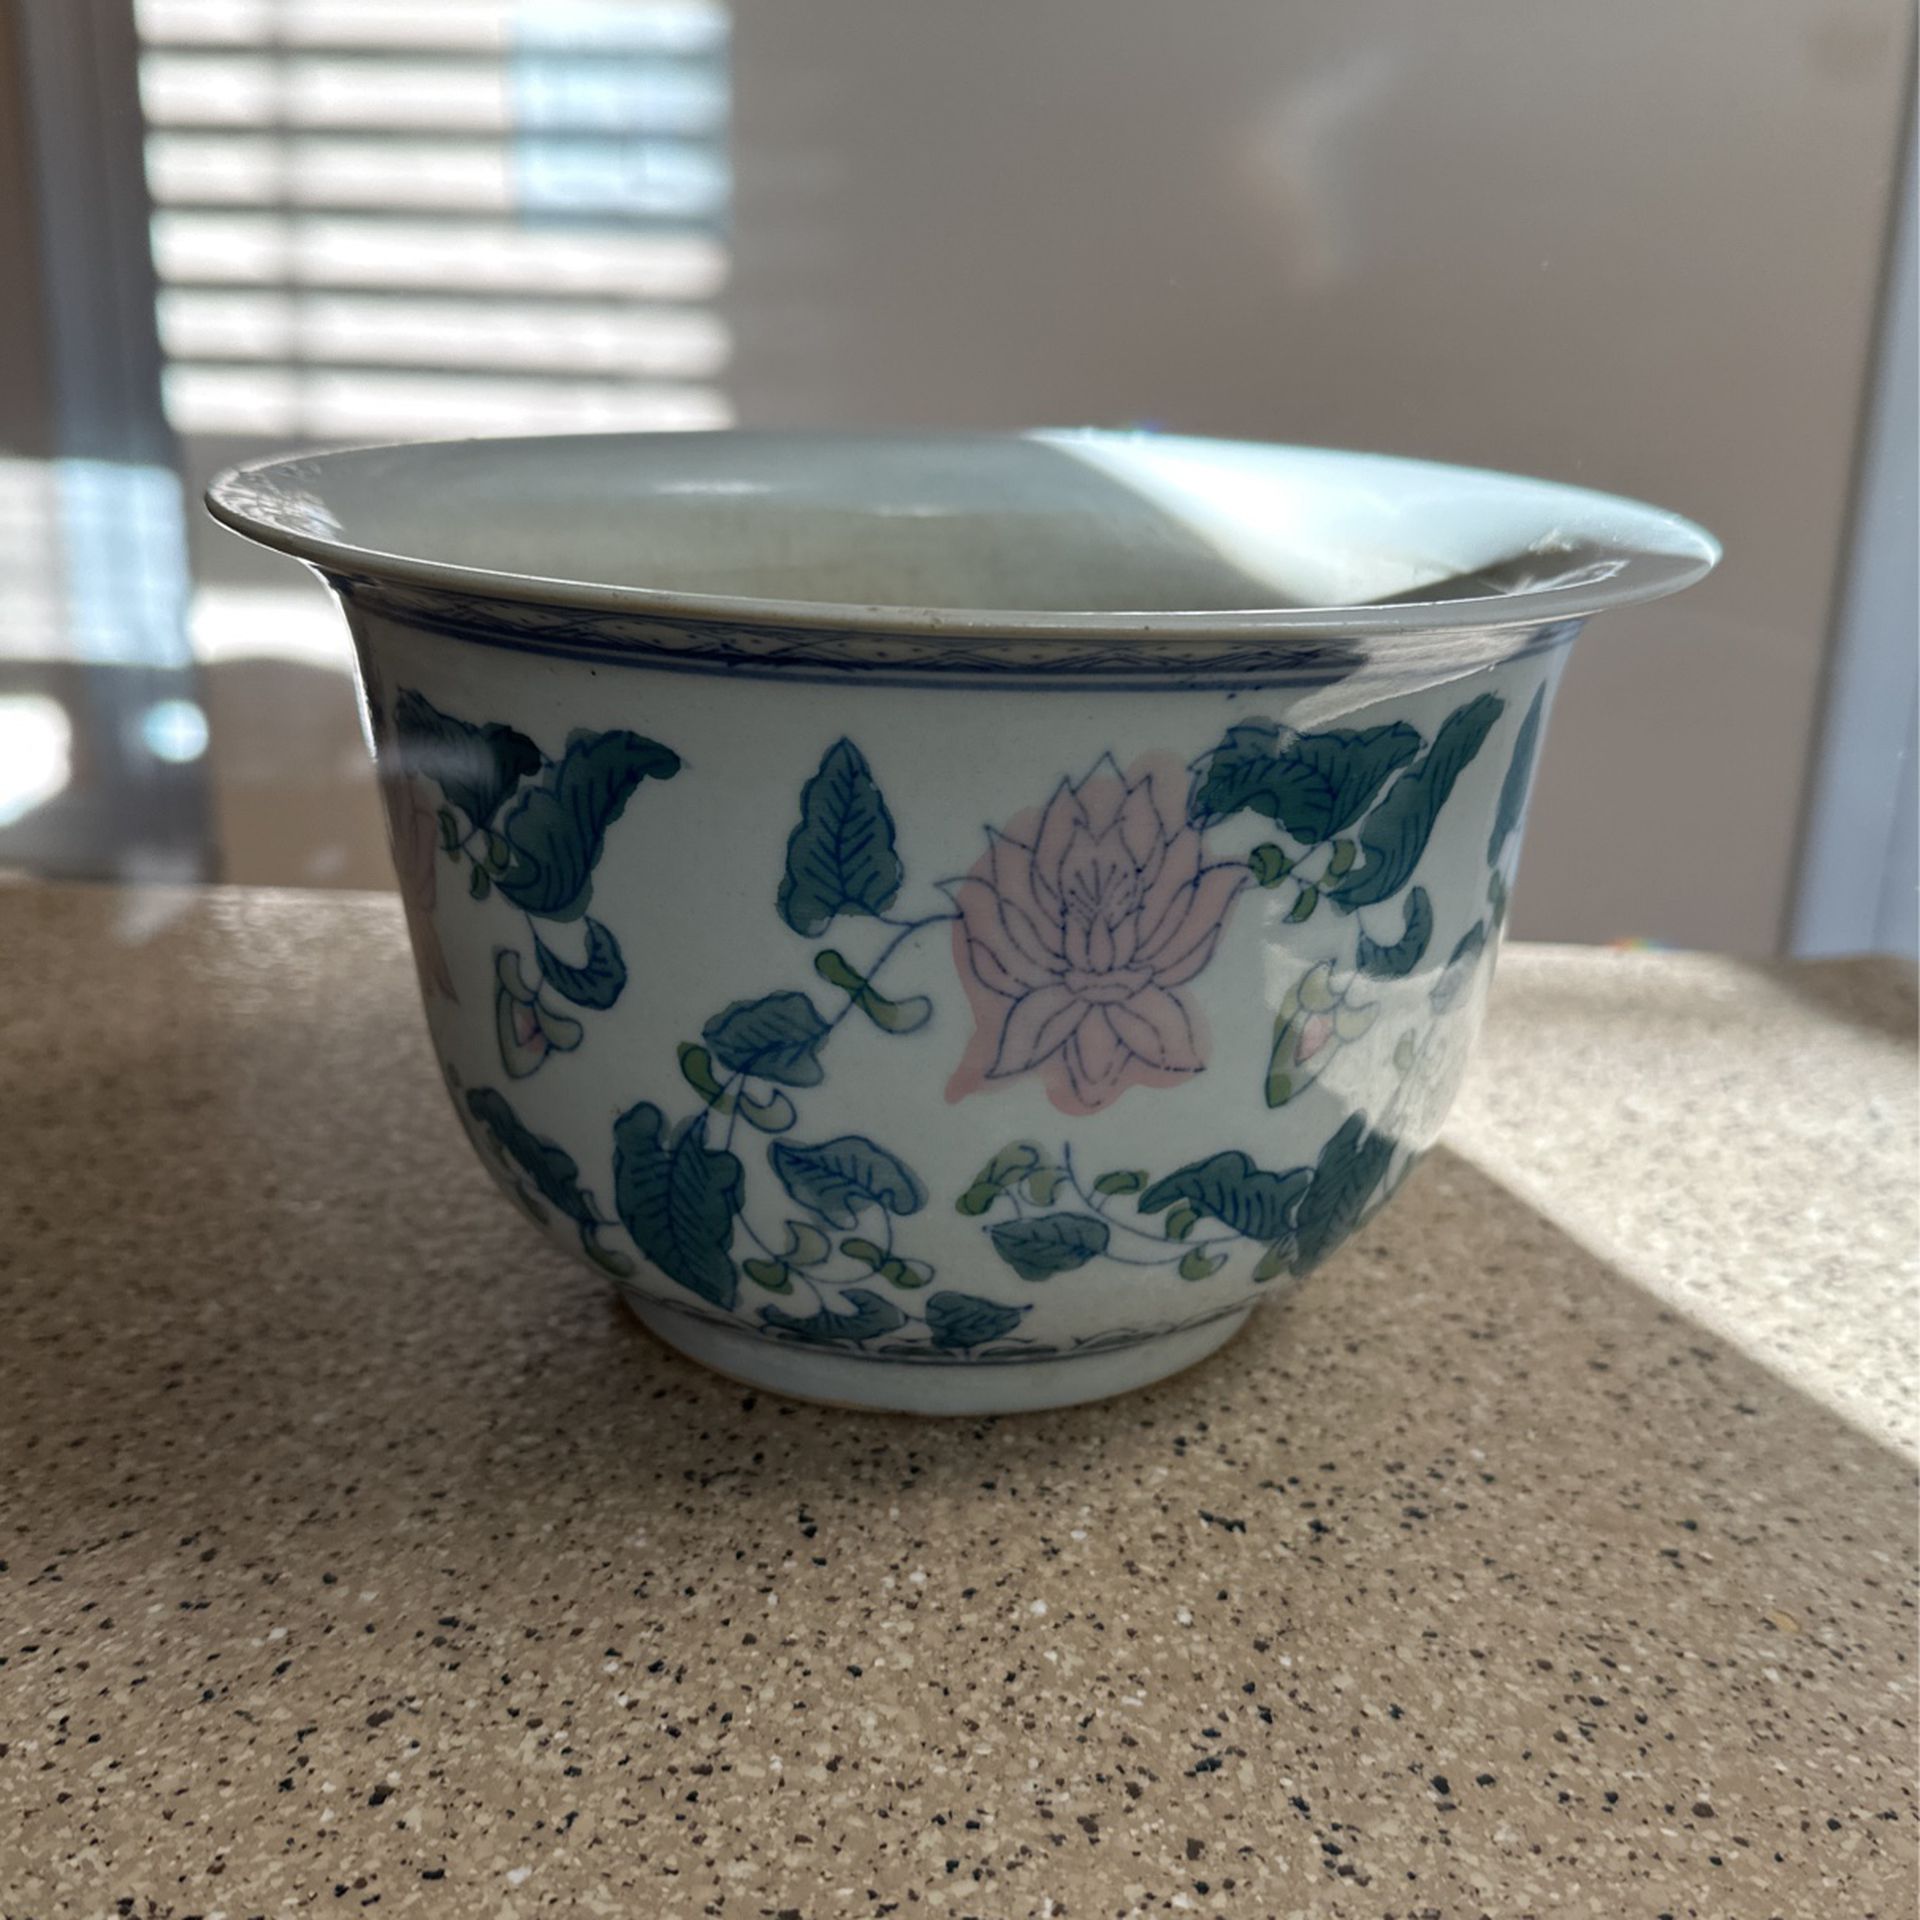 I Think A Porcelain Bowl